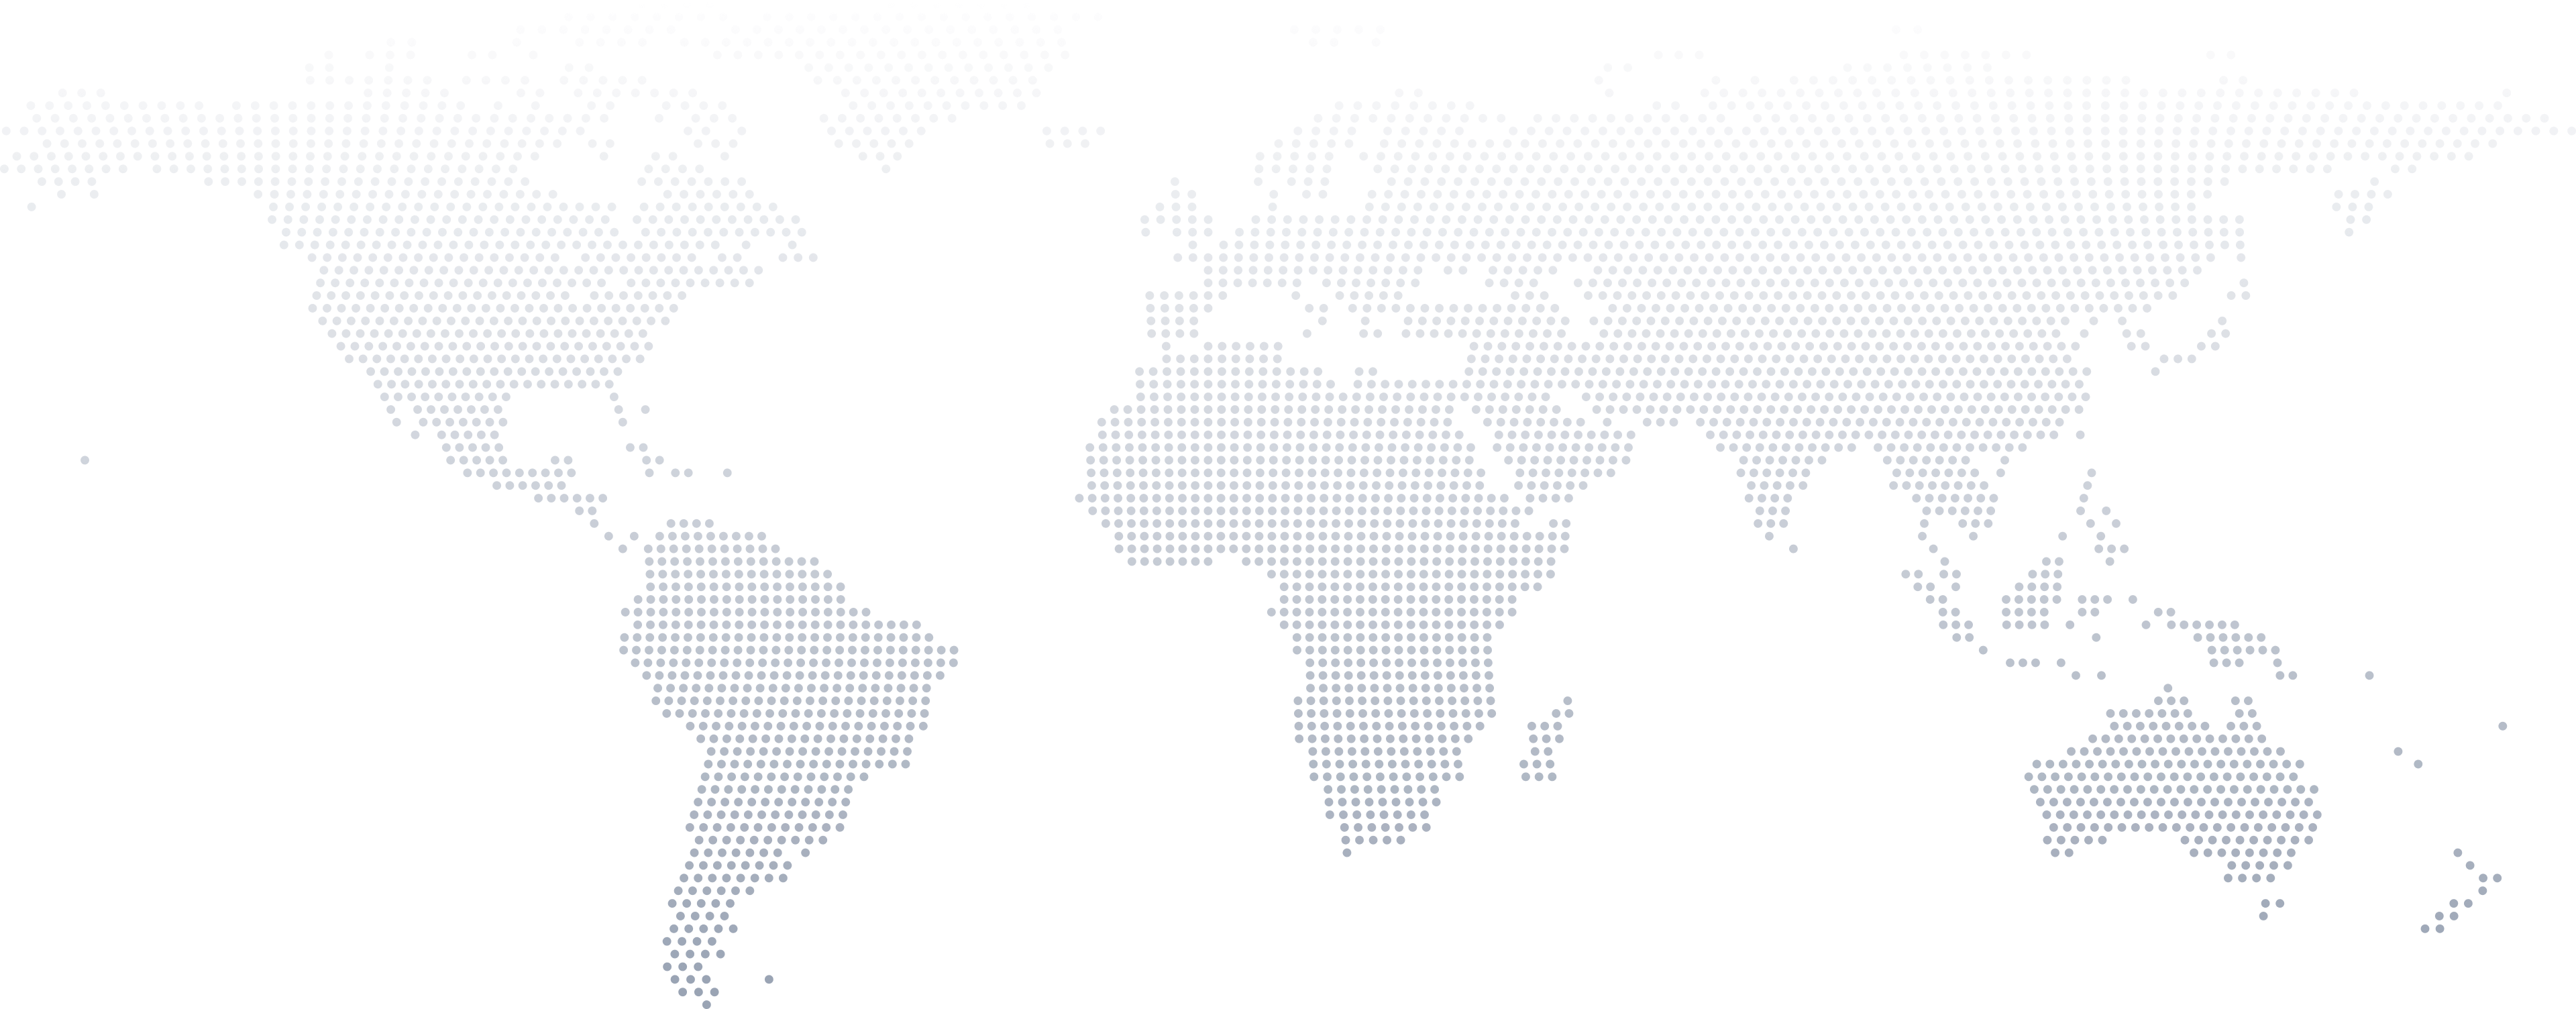 World map digital image